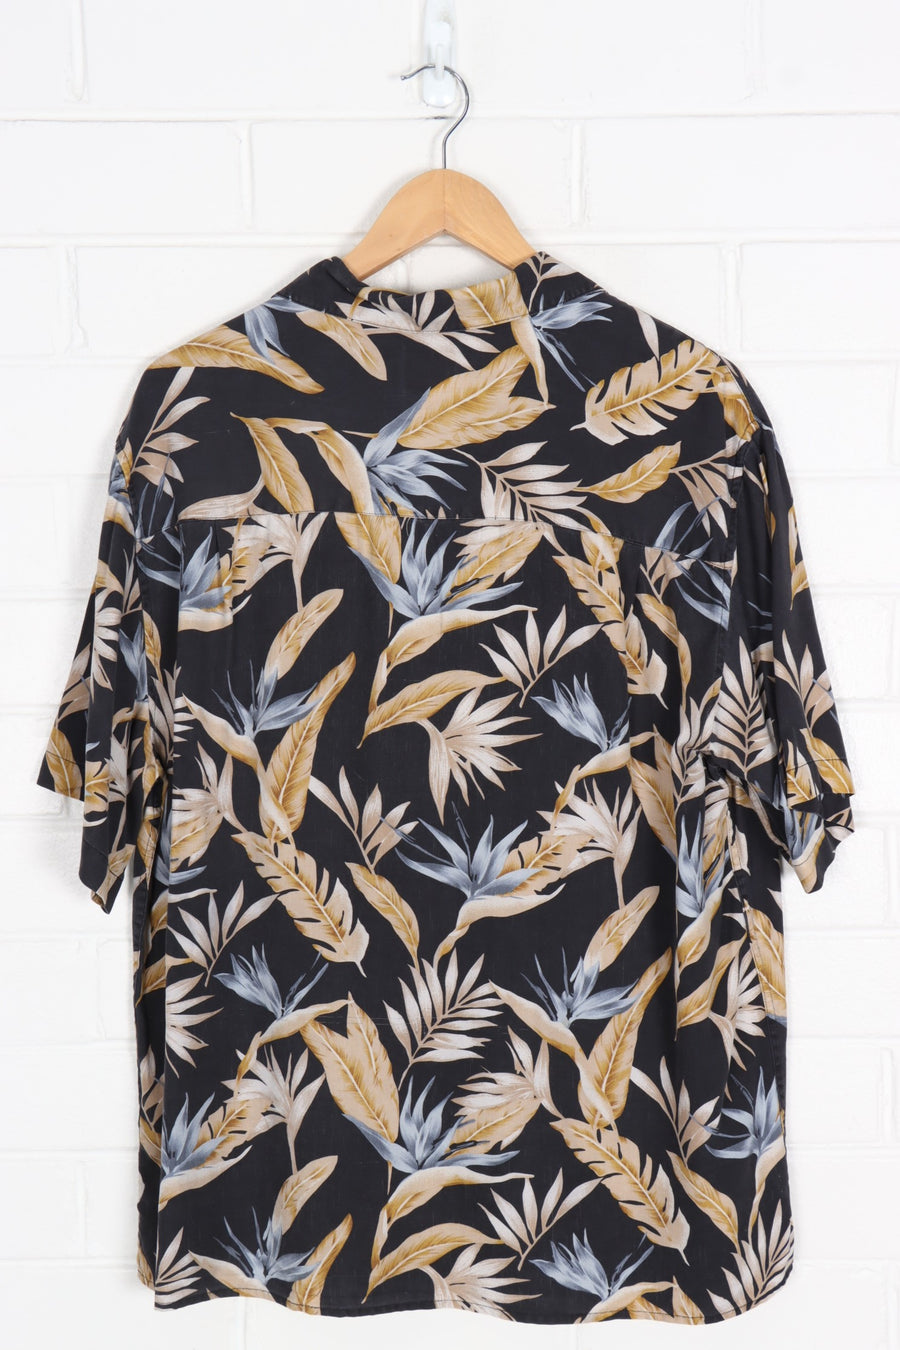 Feathers & Flowers Earthy Tones Silk Shirt (XL)